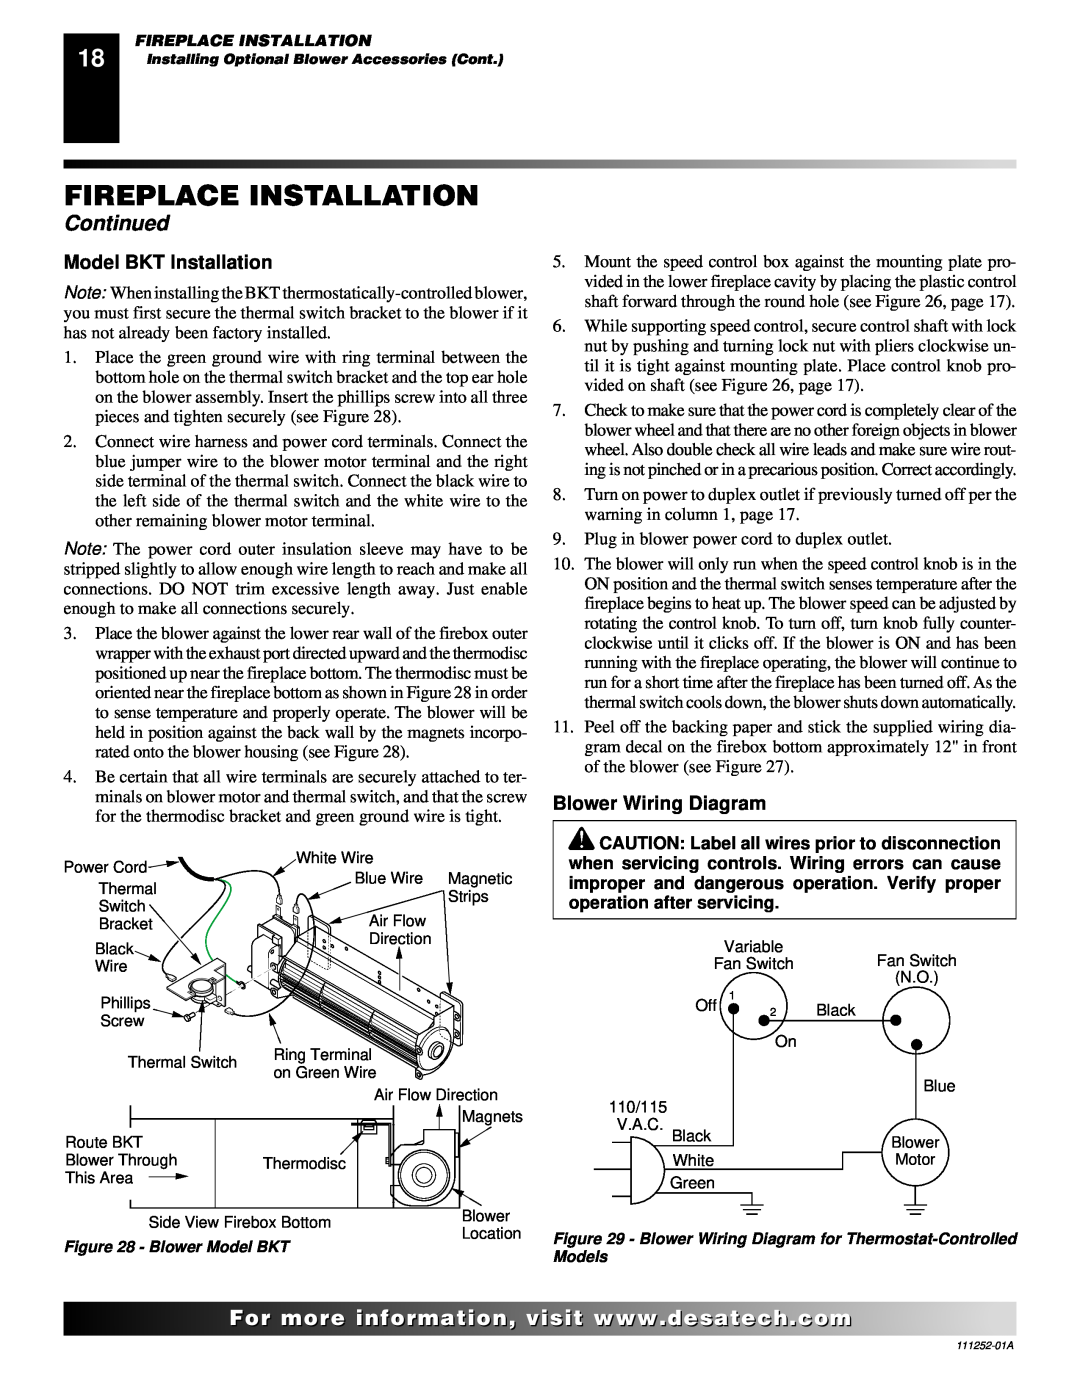 Desa CHDV36NRA installation manual Model BKT Installation, Blower Wiring Diagram, Fireplace Installation, Continued 